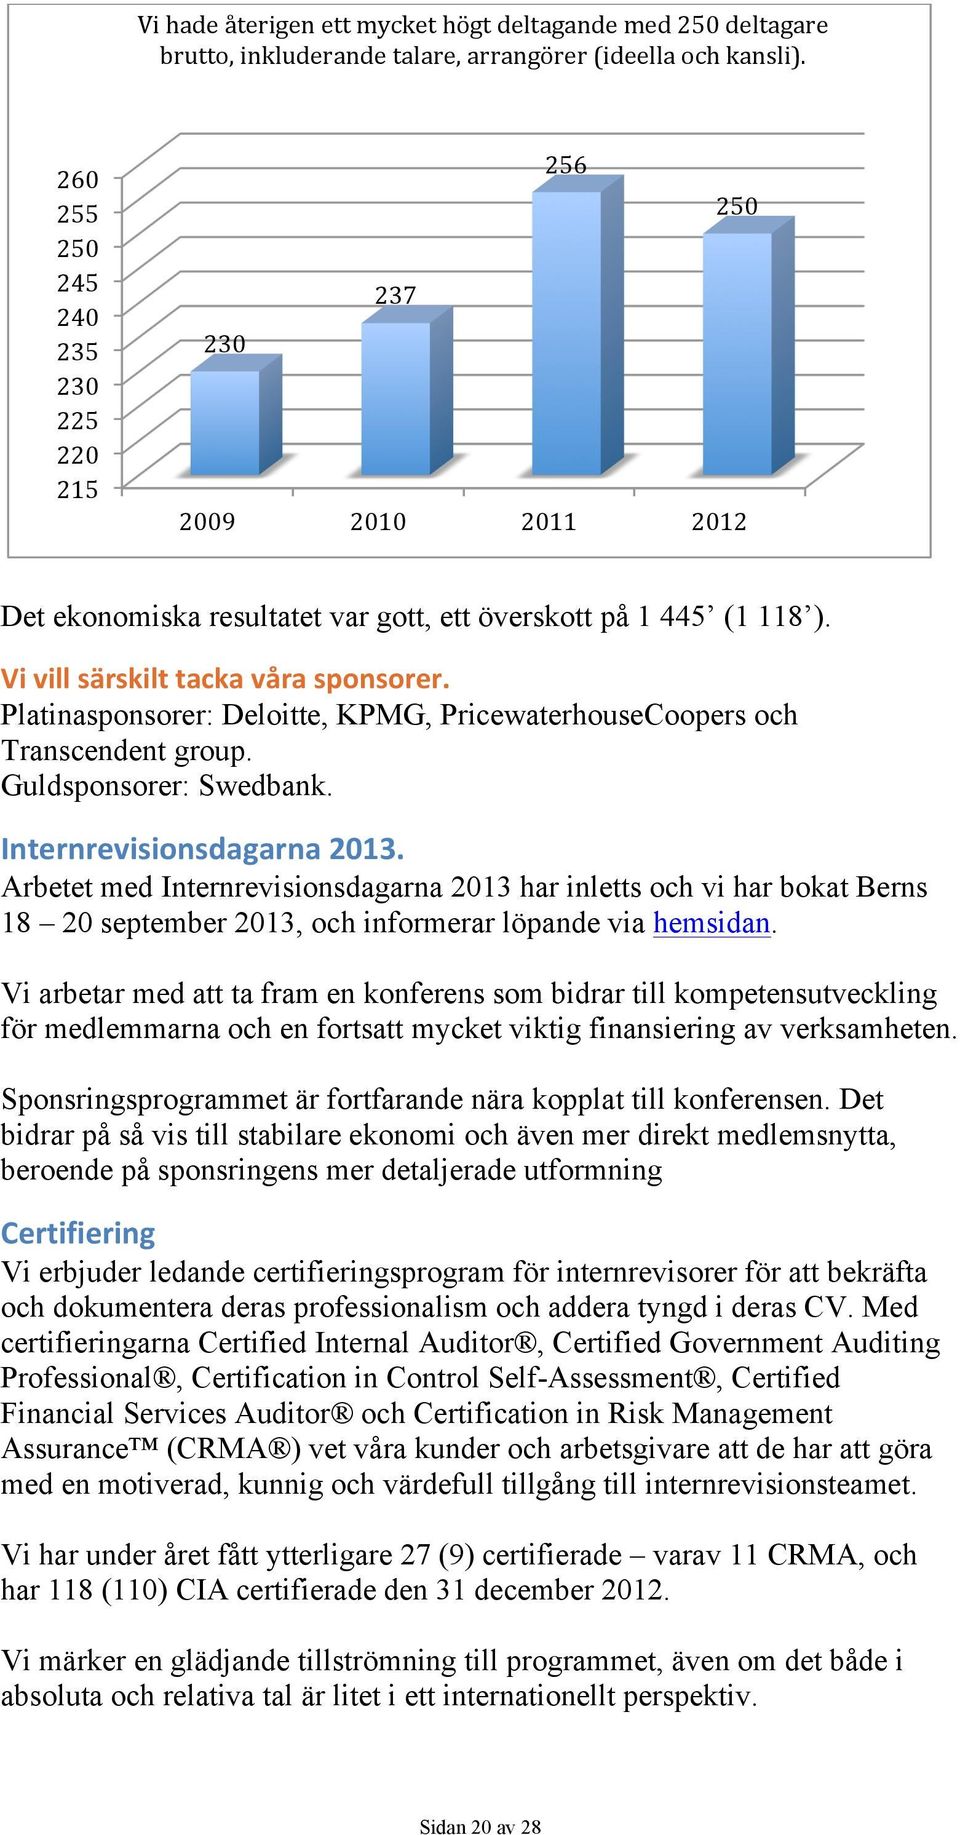 Platinasponsorer: Deloitte, KPMG, PricewaterhouseCoopers och Transcendent group. Guldsponsorer: Swedbank. Internrevisionsdagarna 2013.